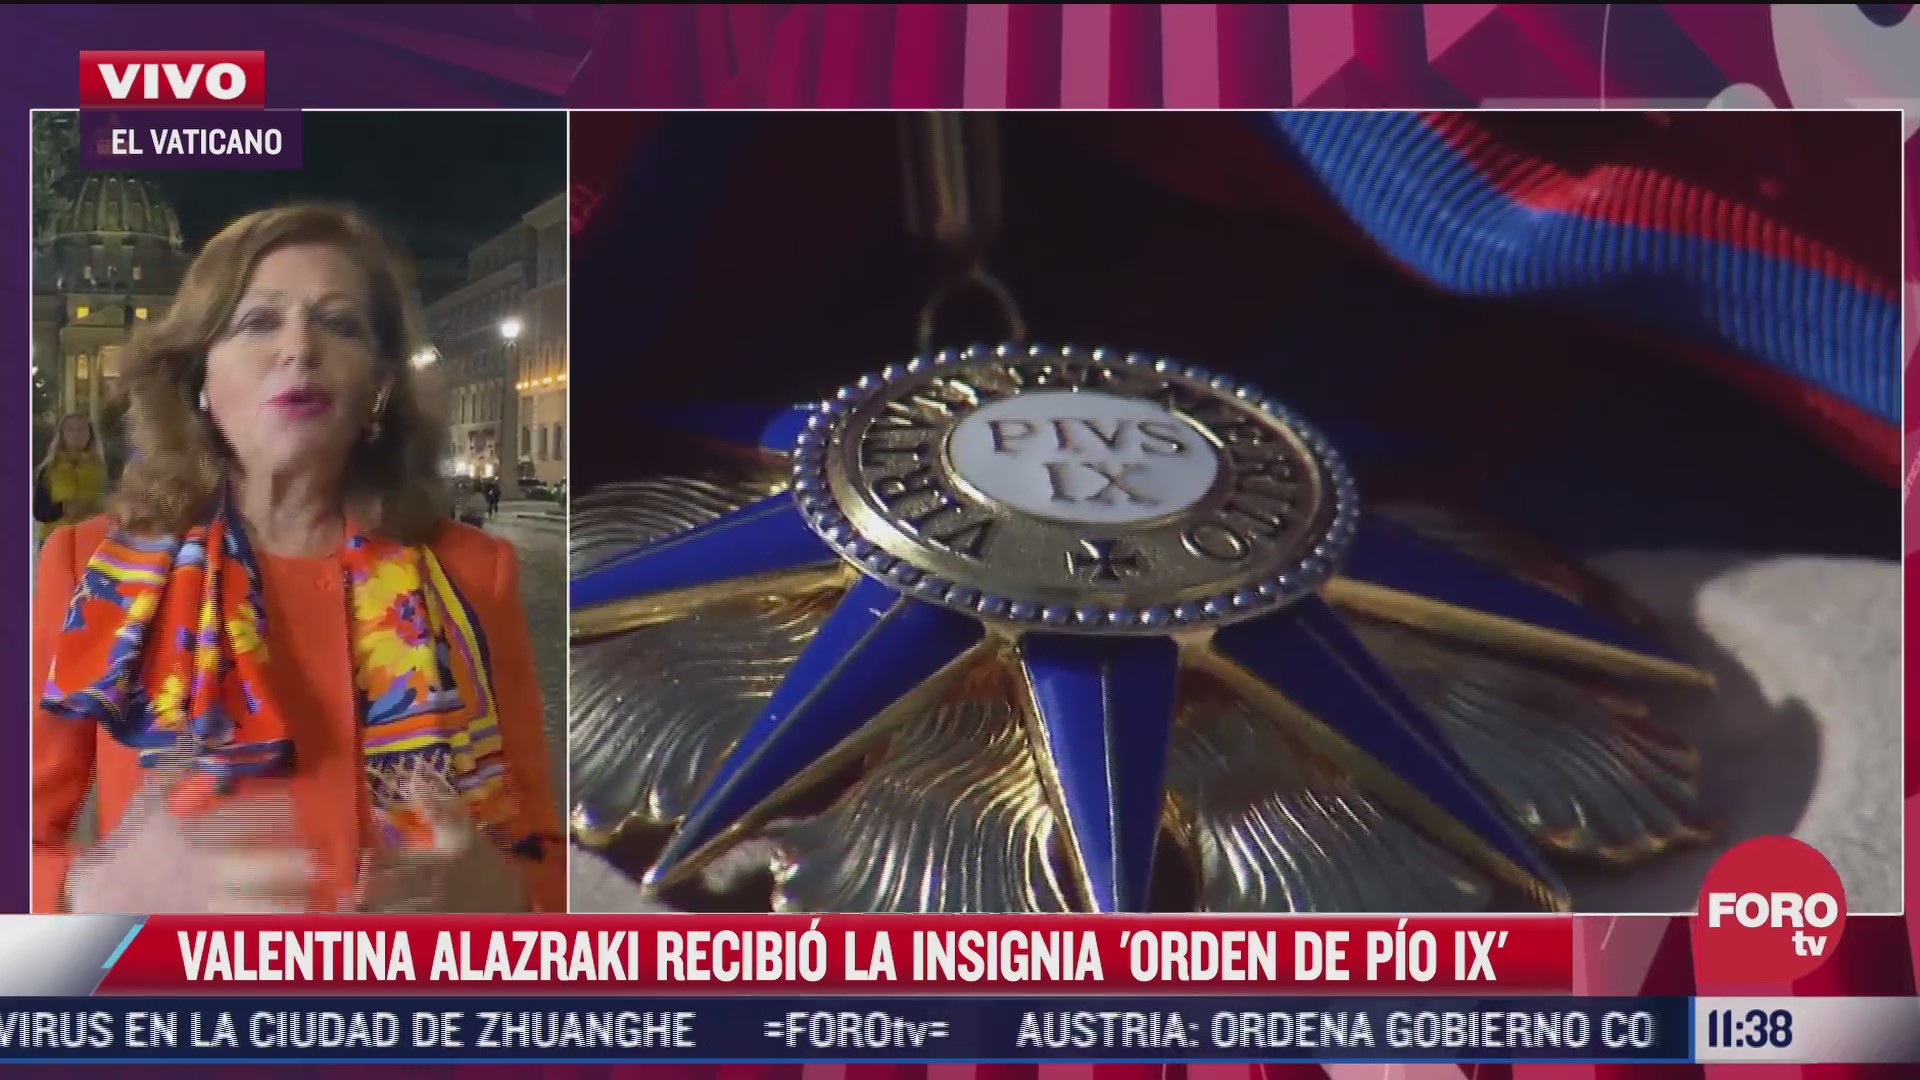 karla iberia sanchez entrevista a valentina alazraki tras recibir la insignia orden de pio ix